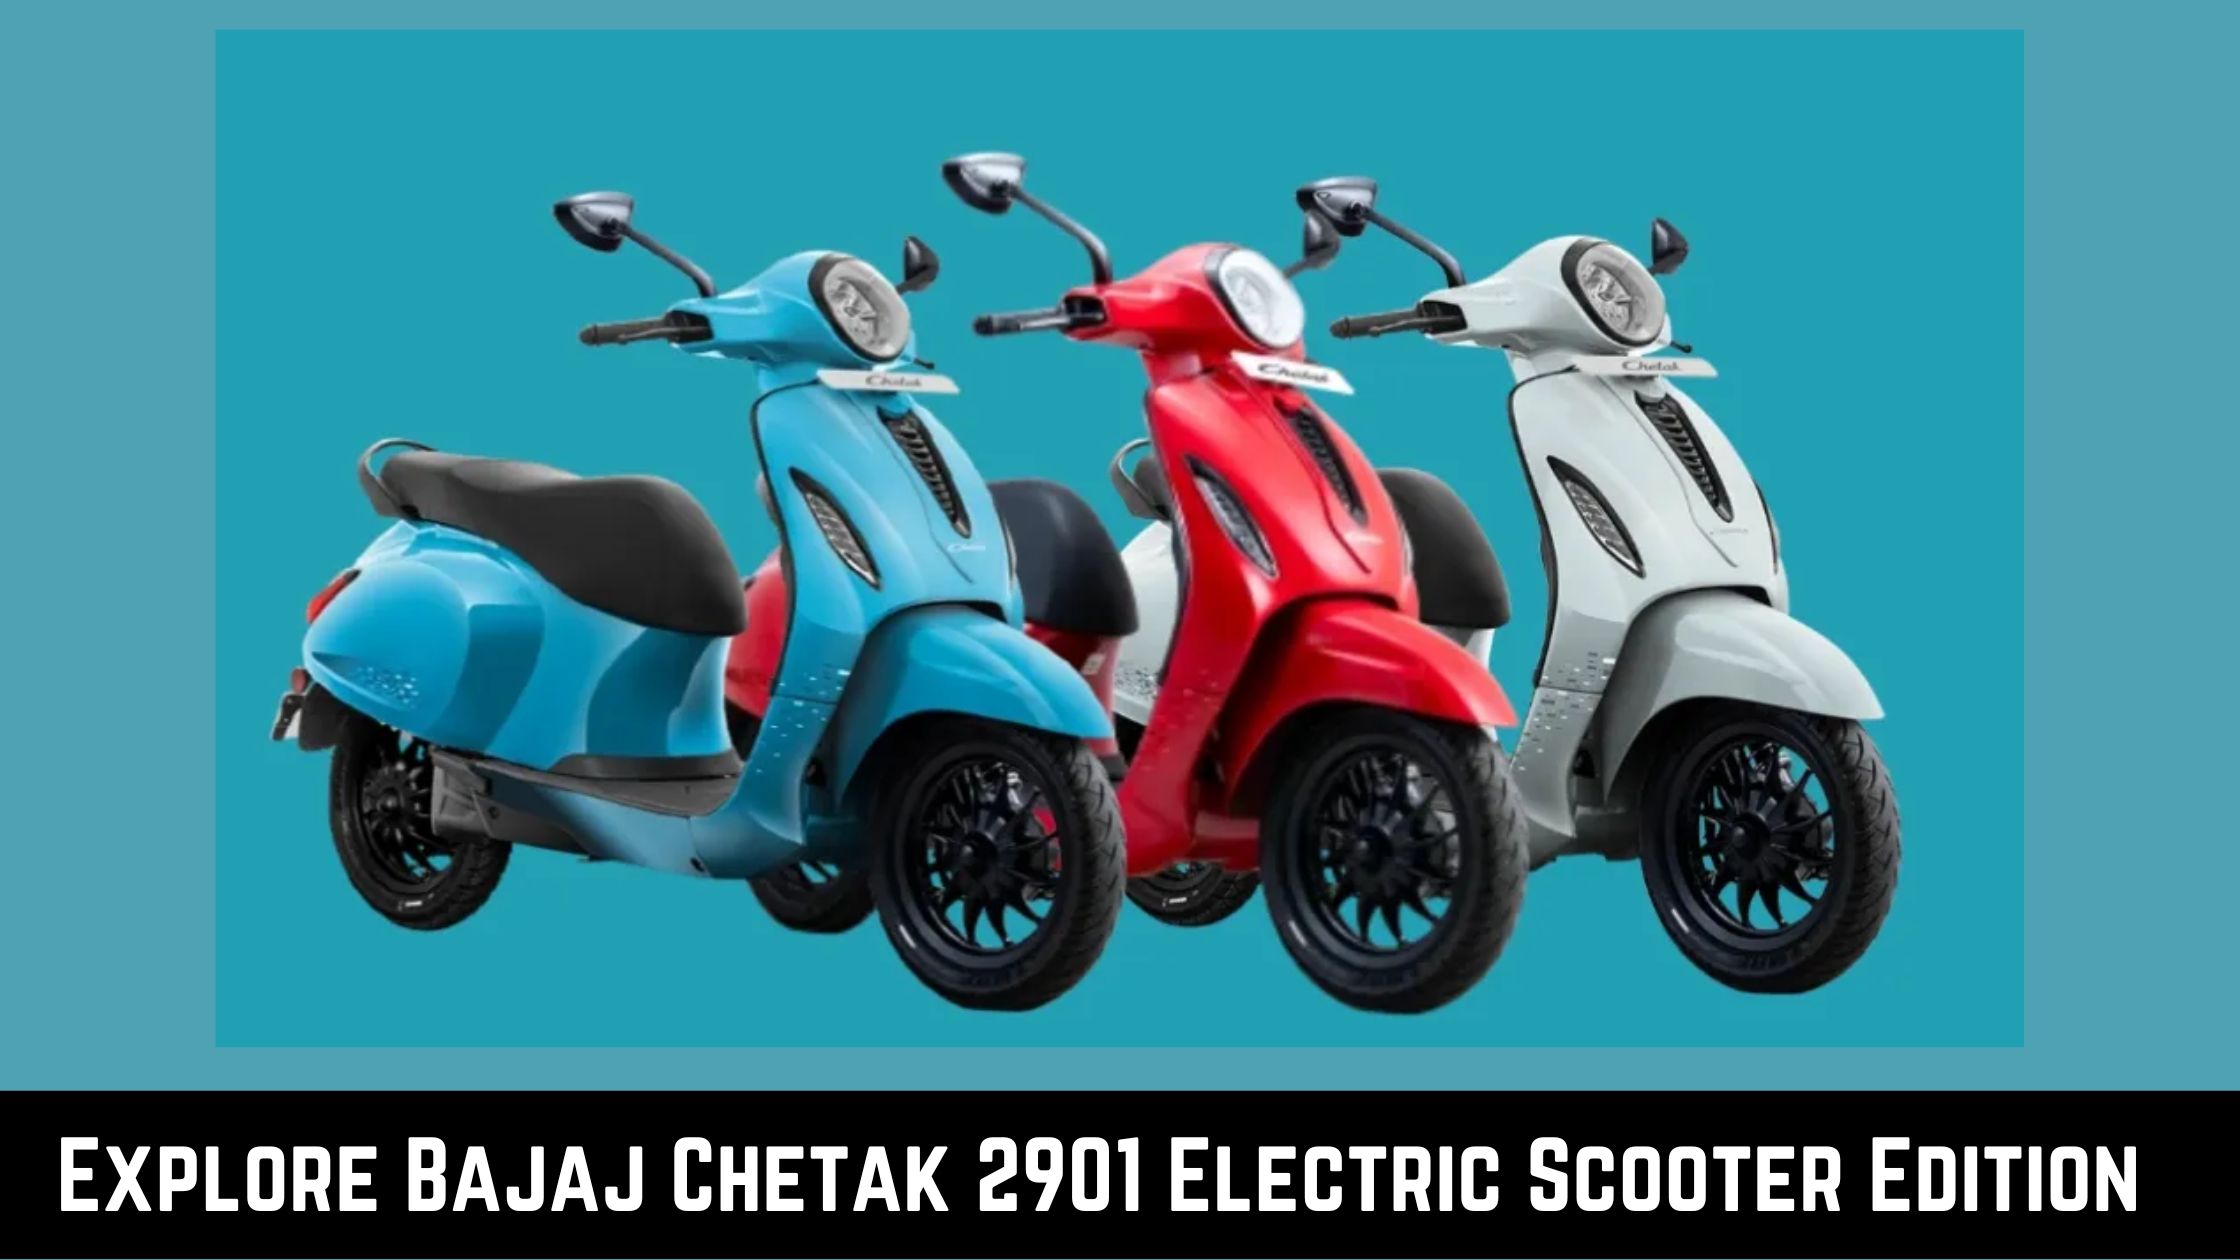 Explore Bajaj Chetak 2901 Electric Scooter Edition